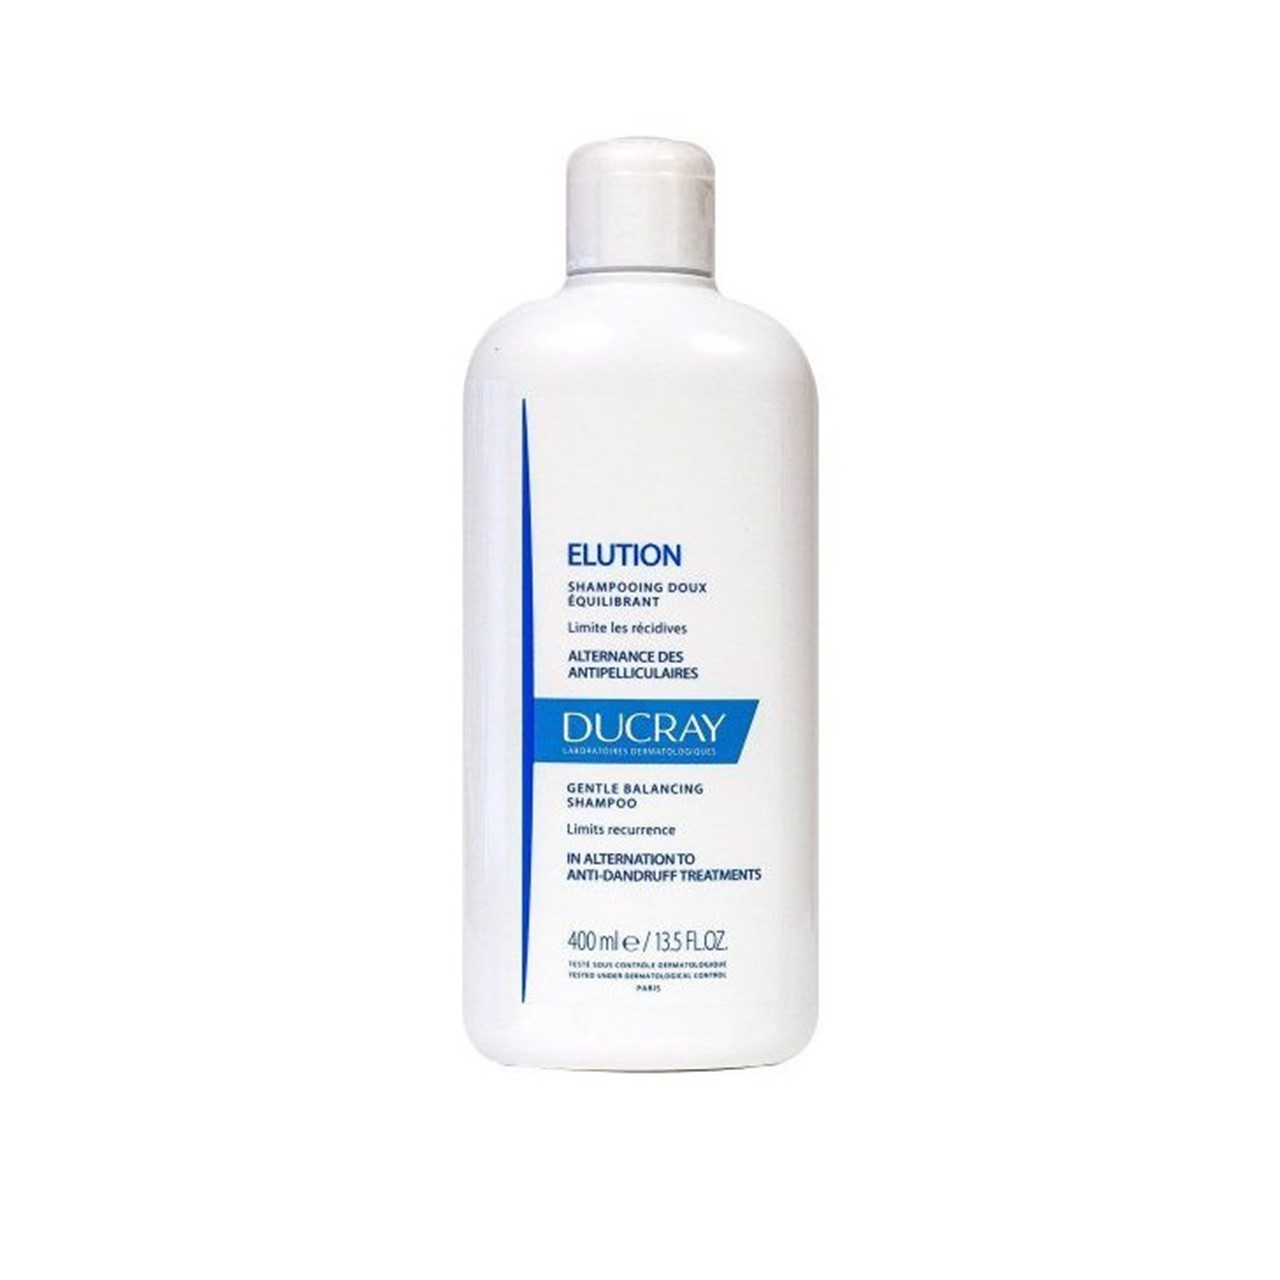 Ducray Elution Gentle Balancing Shampoo 400ml (13.53fl oz)